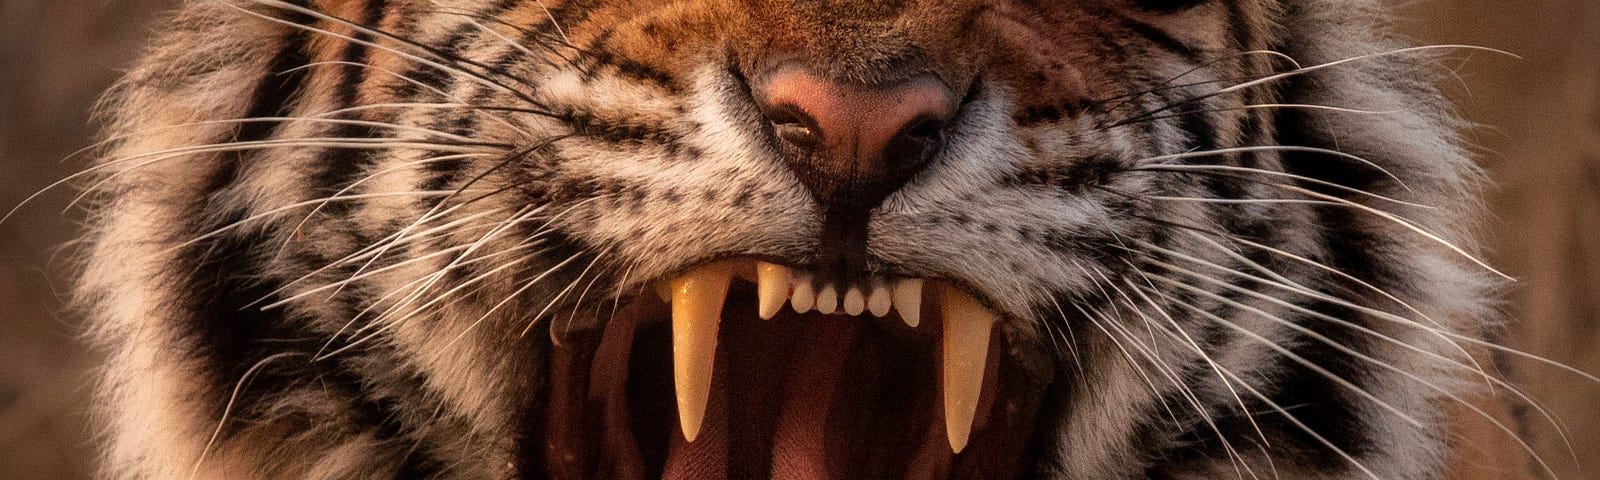 An angry tigress roars.